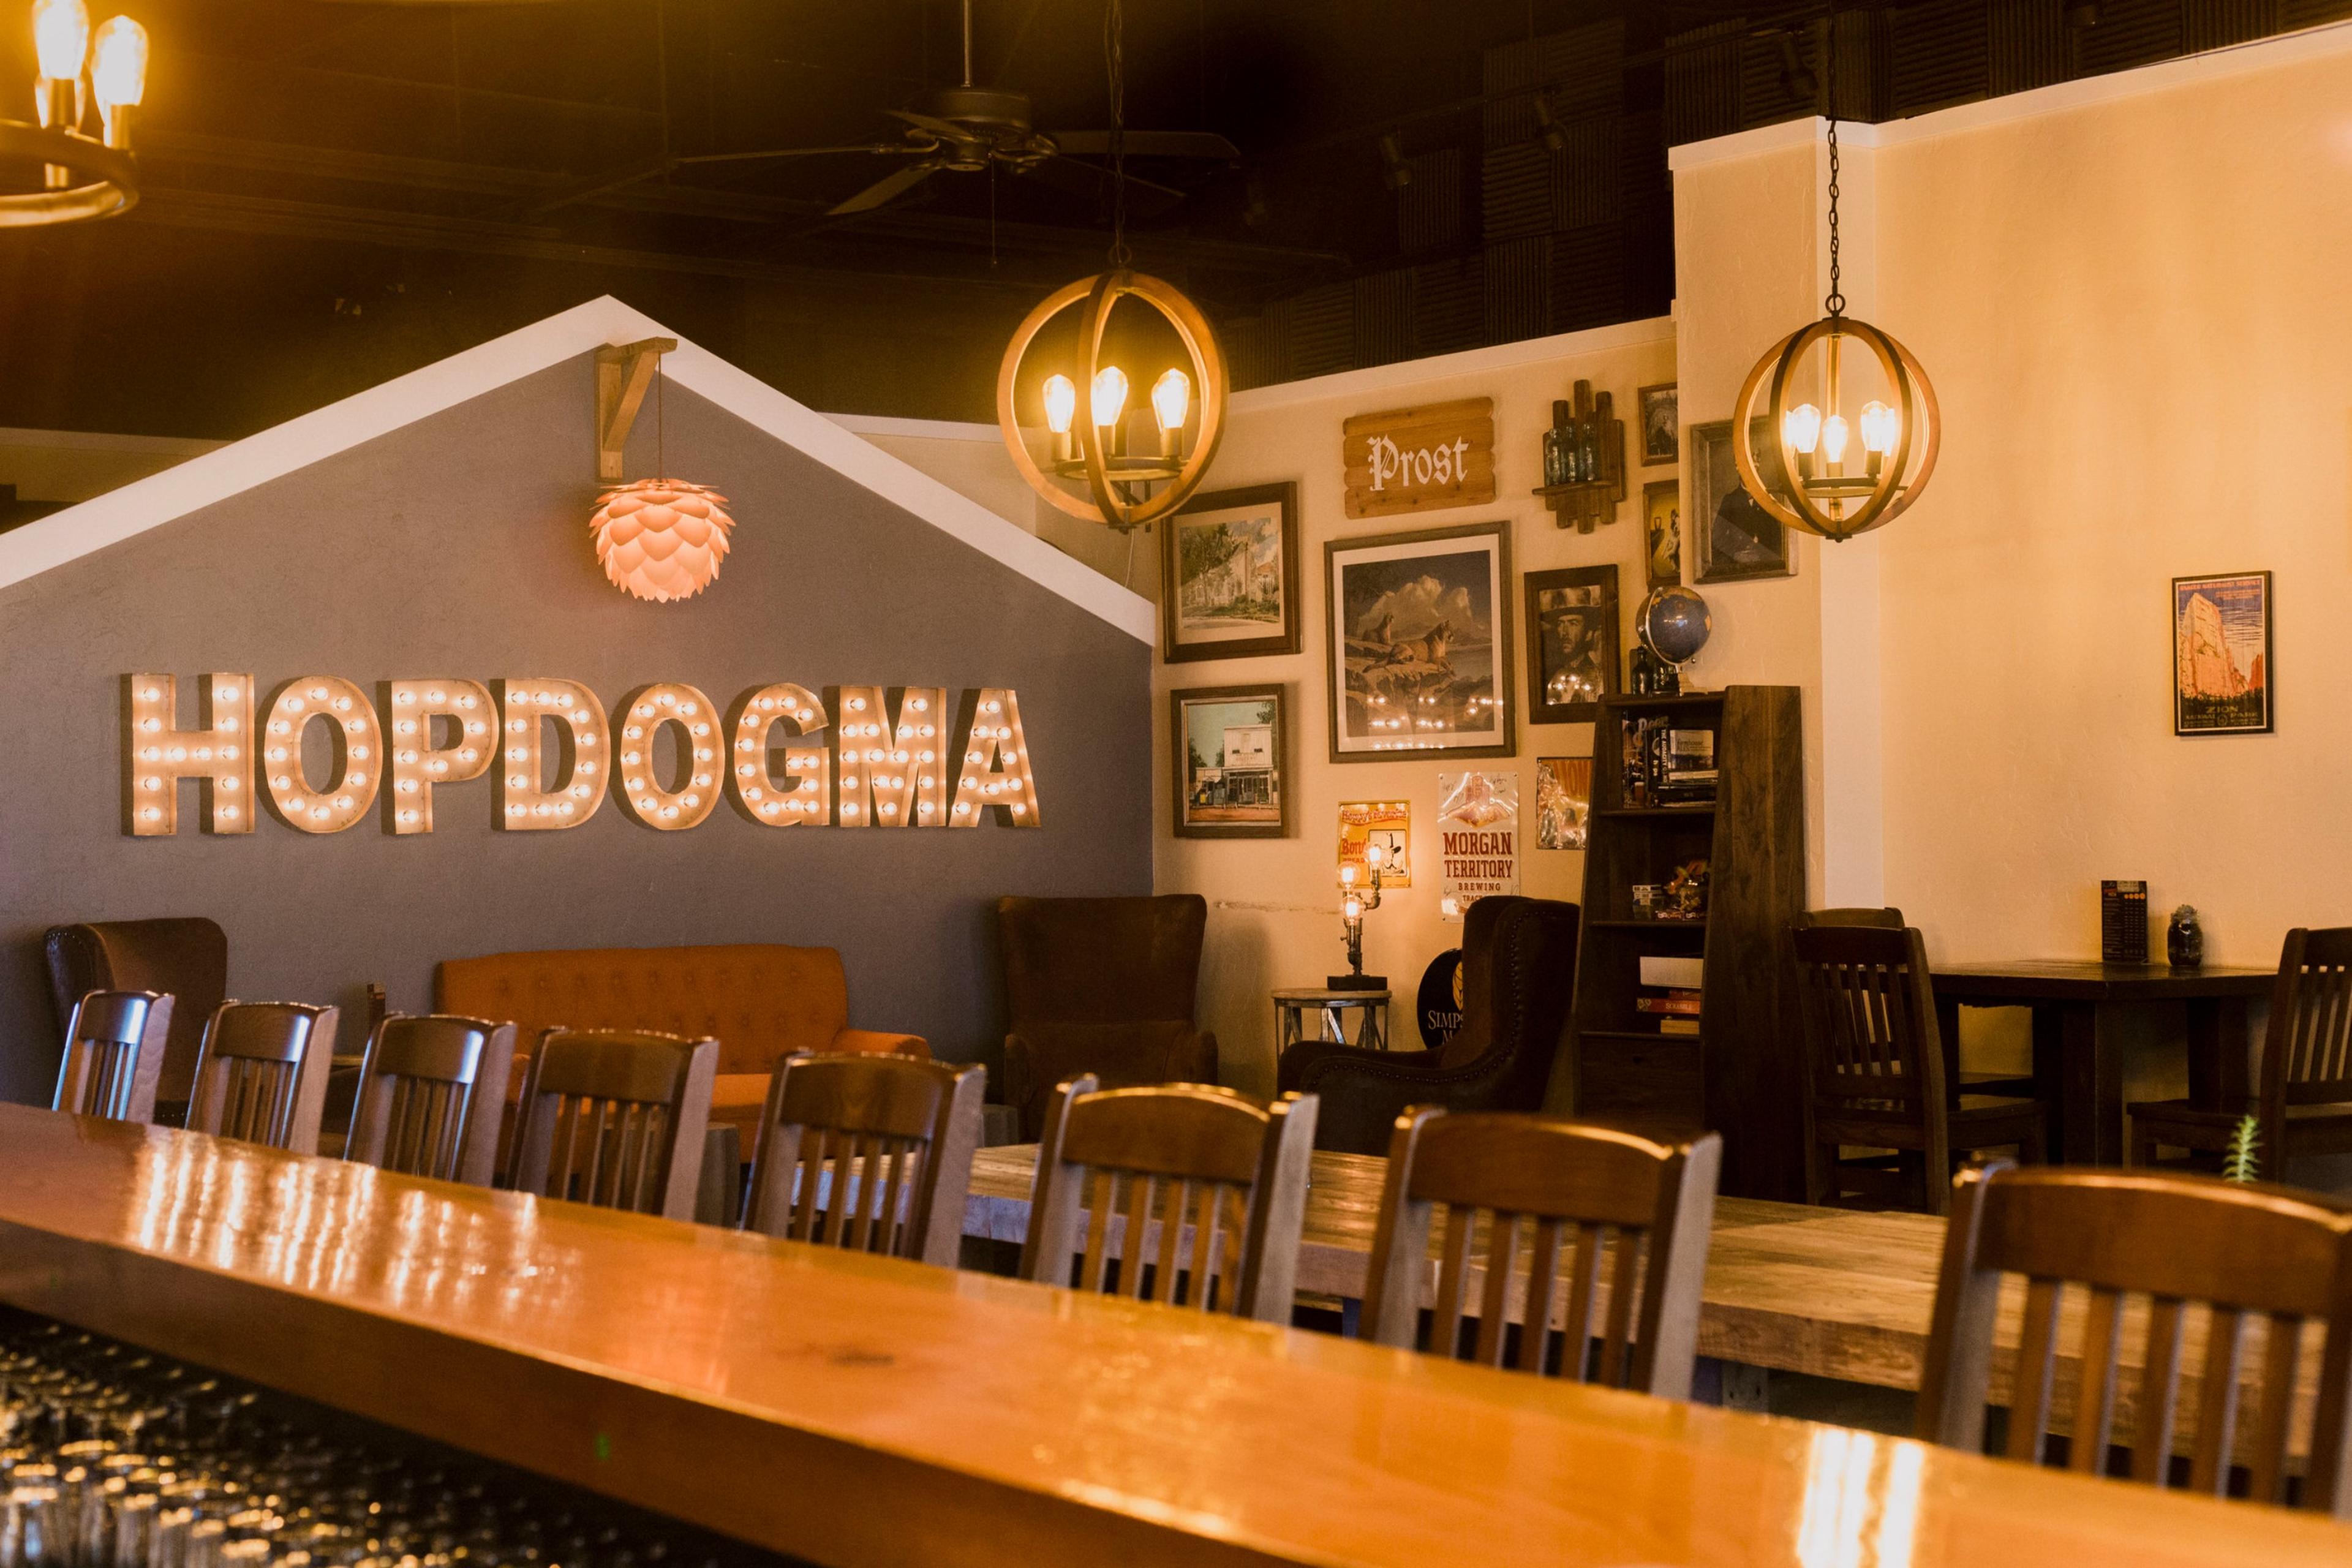 Hop Dogma Brewing Company